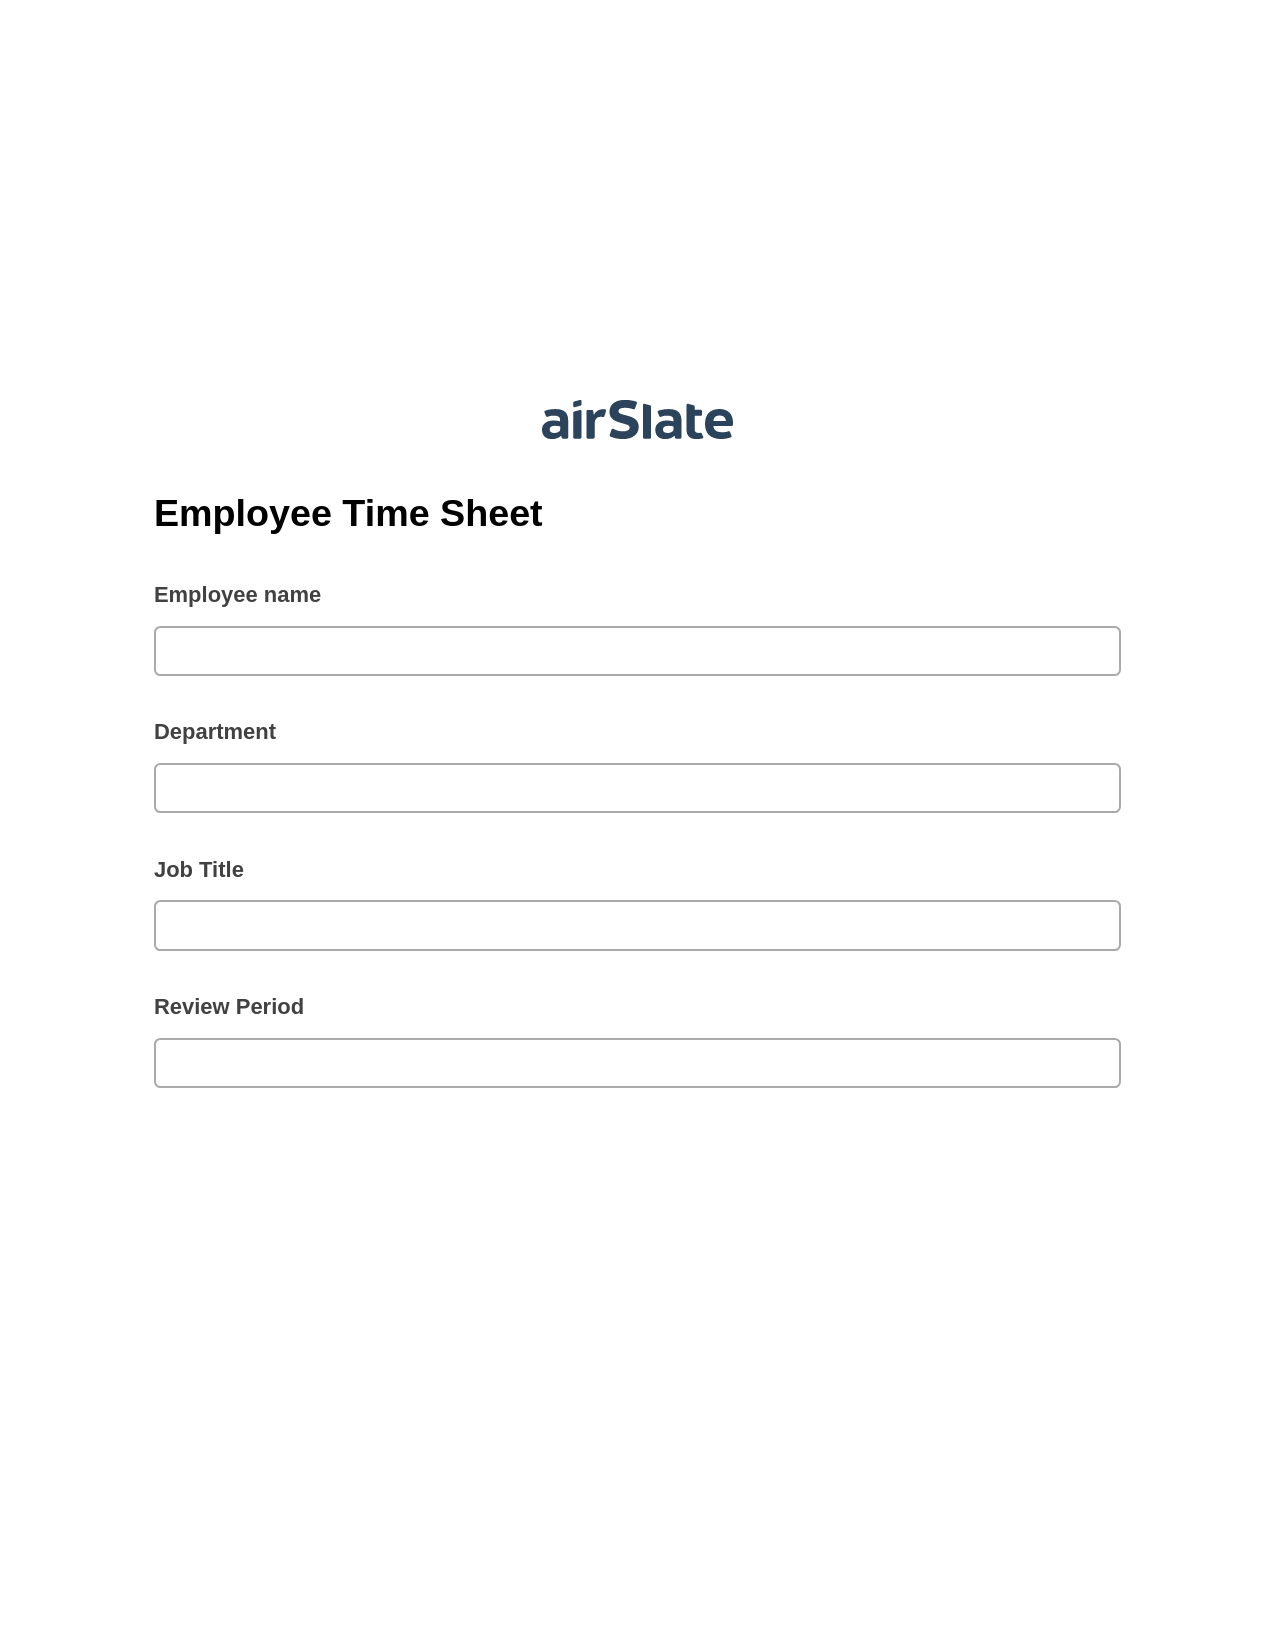 Employee Time Sheet Pre-fill Dropdowns from Google Sheet Bot, Create slate addon, Archive to OneDrive Bot